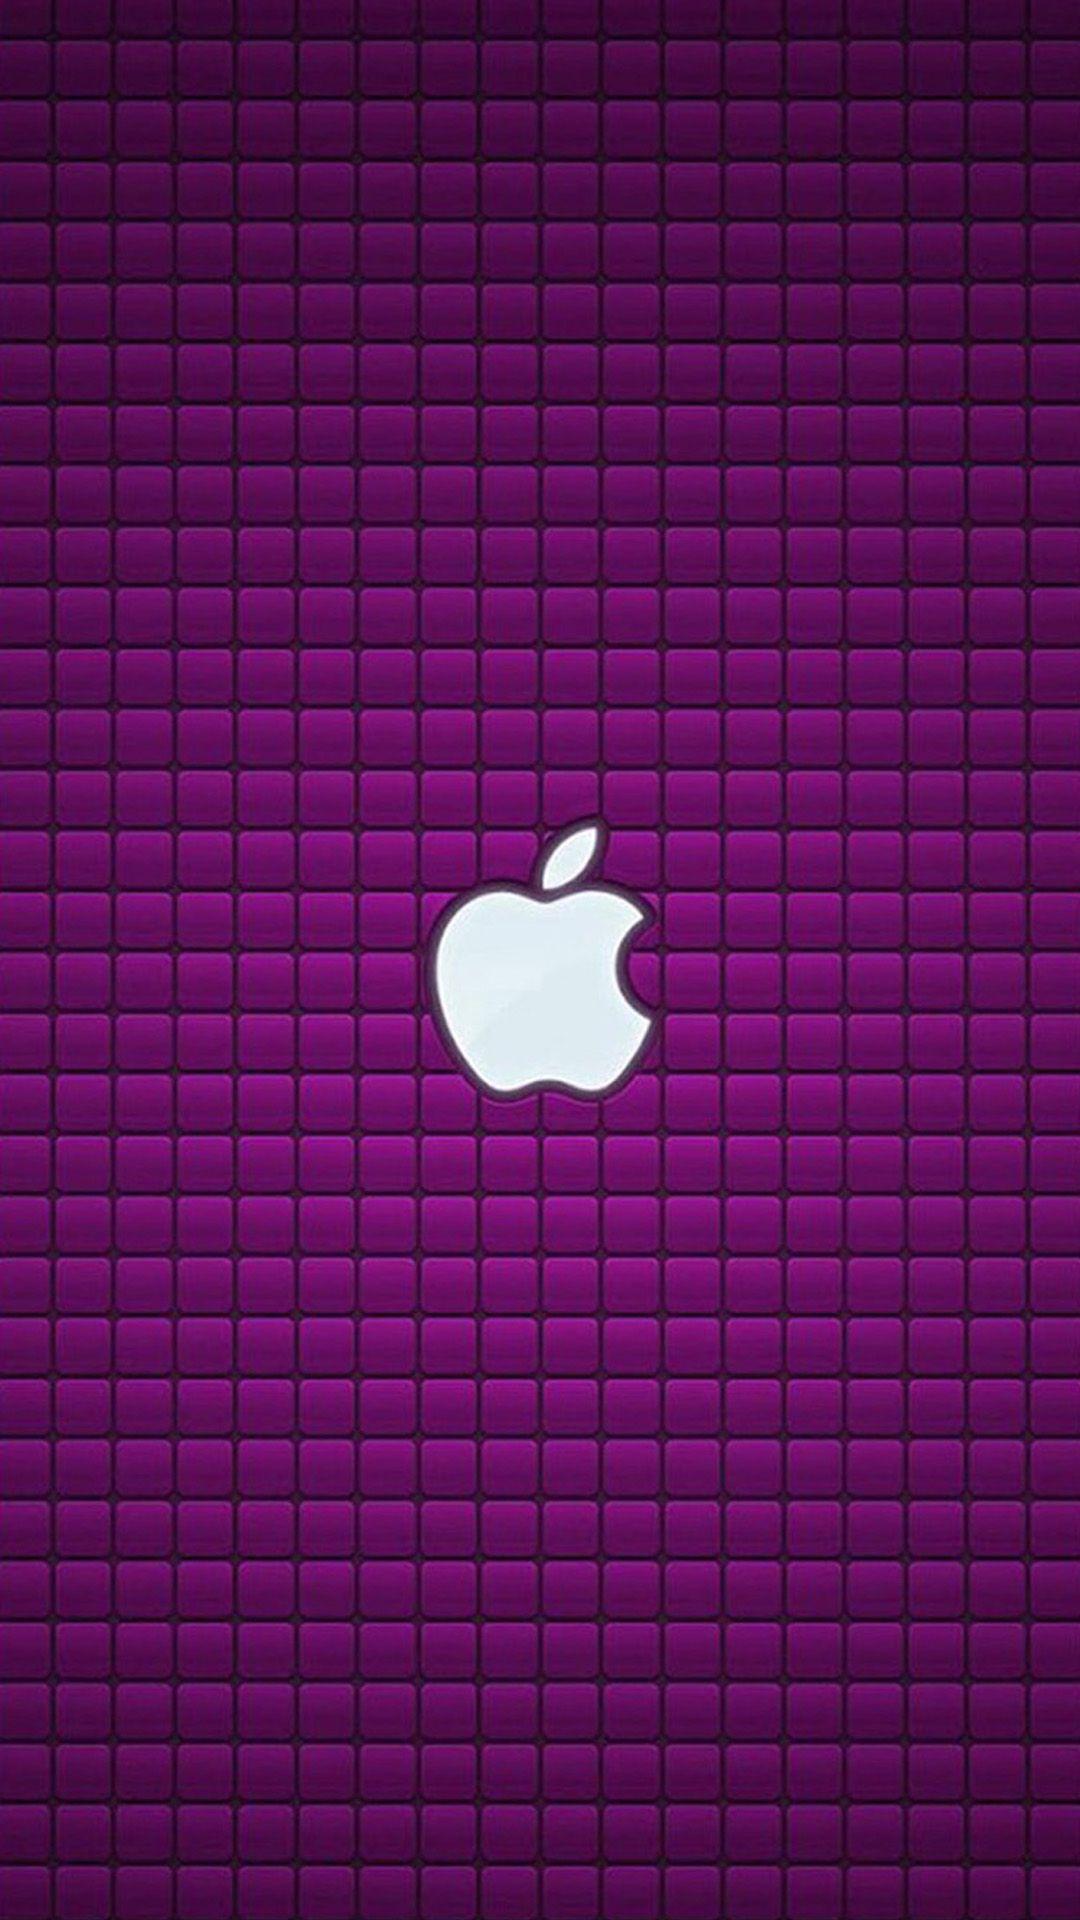 purple apple logo iphone background desktop wallpaper high